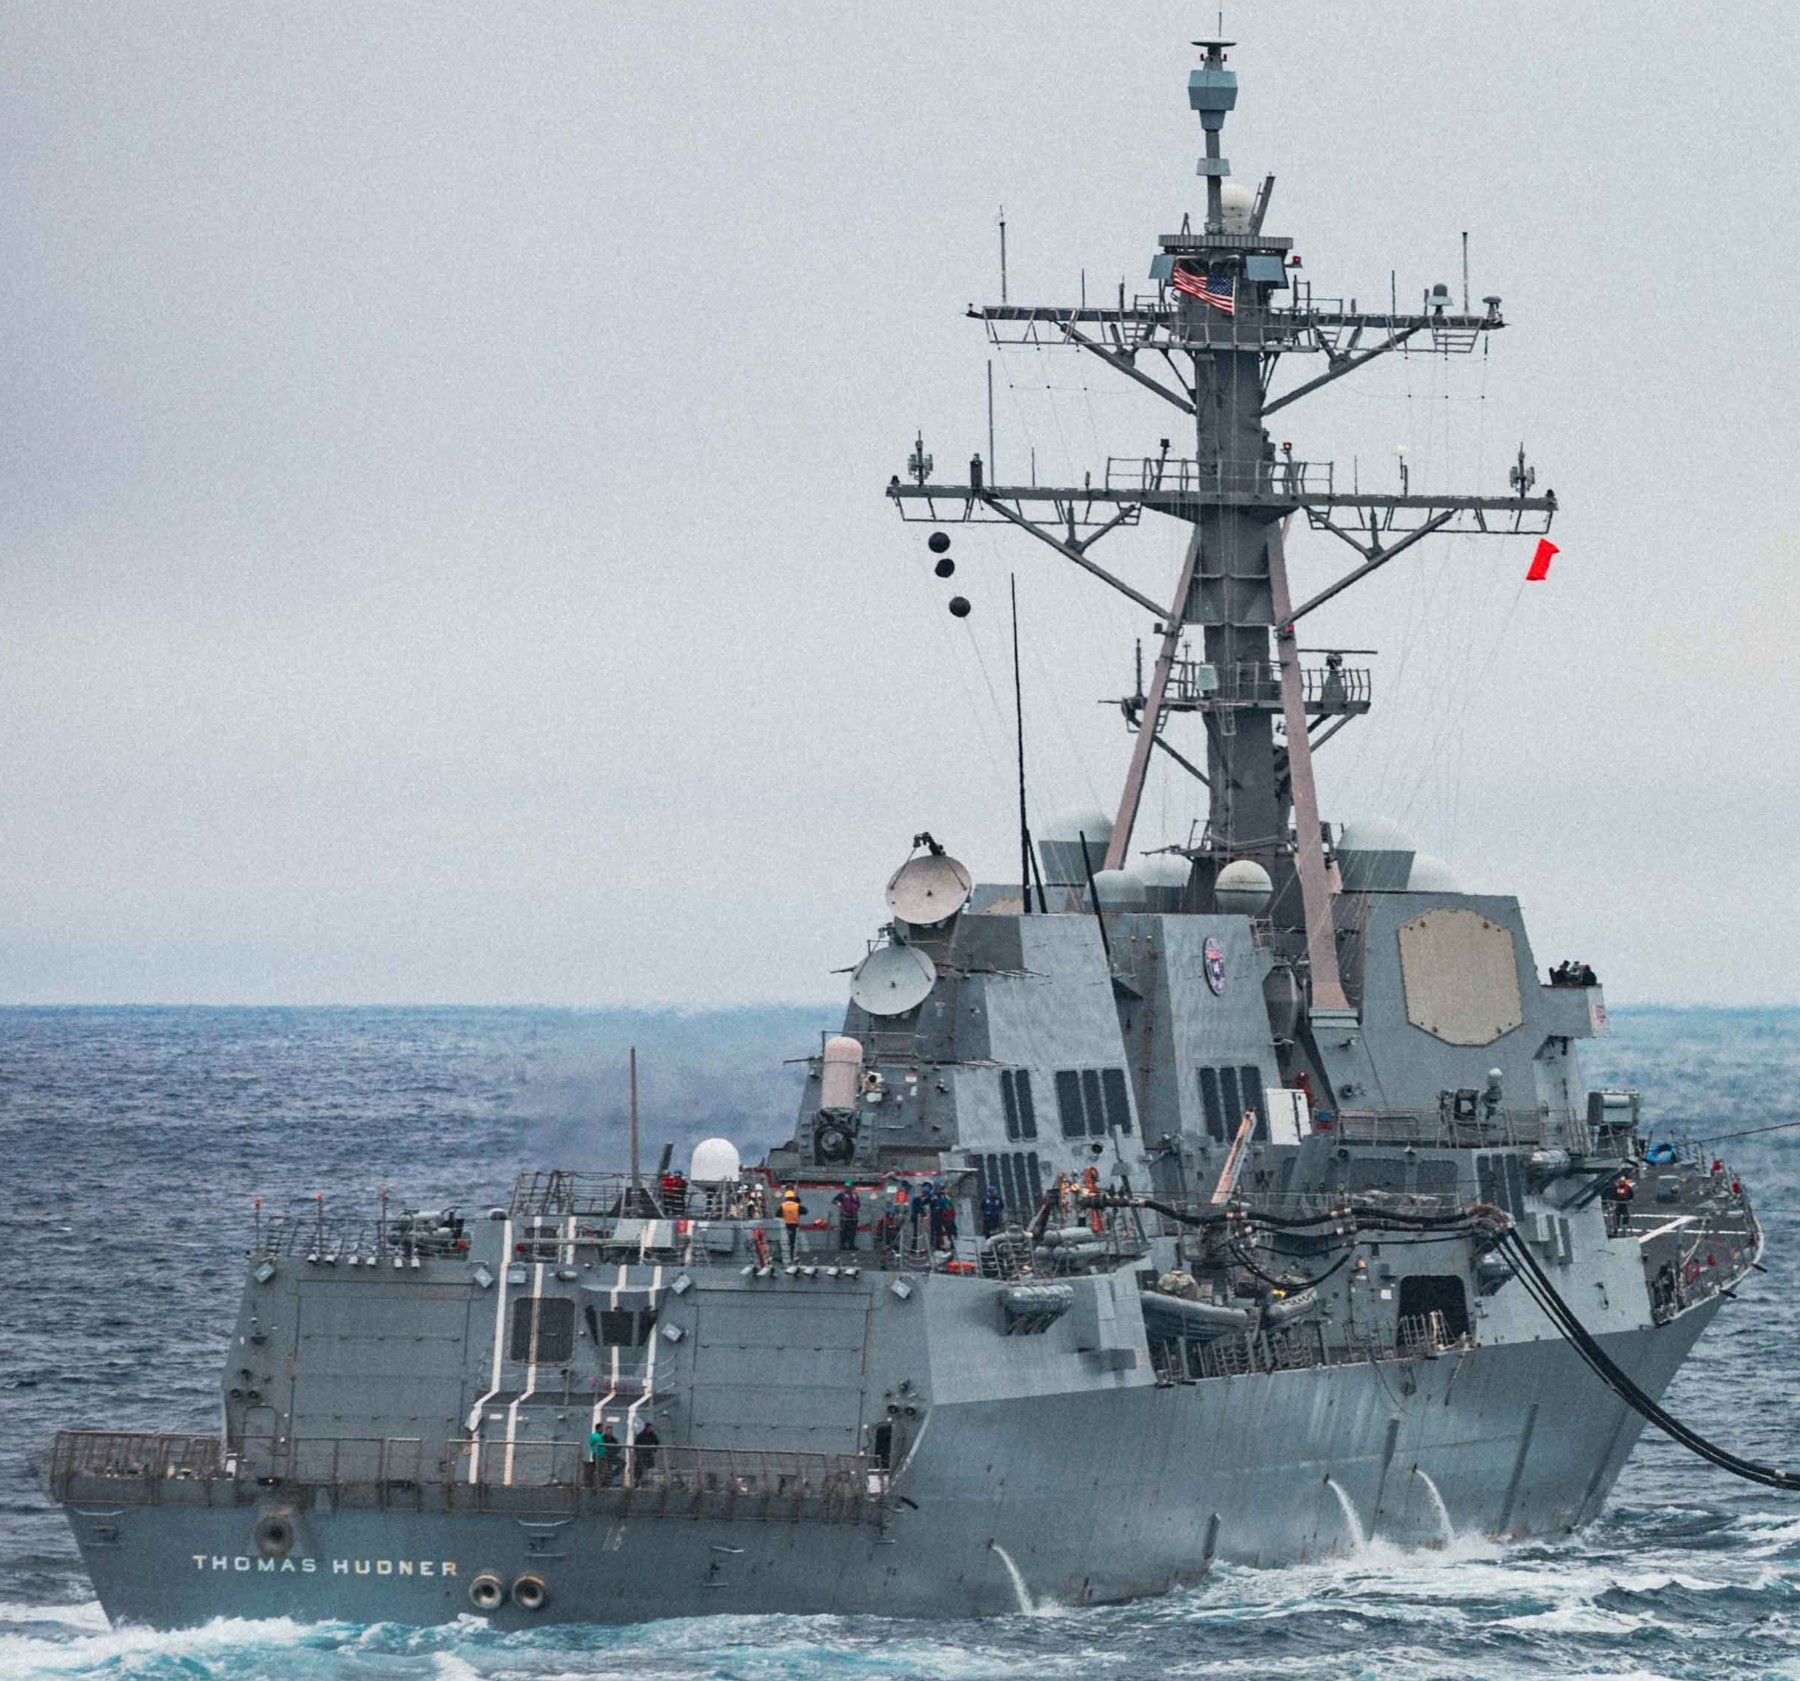 ddg-116 uss thomas hudner arleigh burke class guided missile destroyer aegis us navy atlantic ocean 46